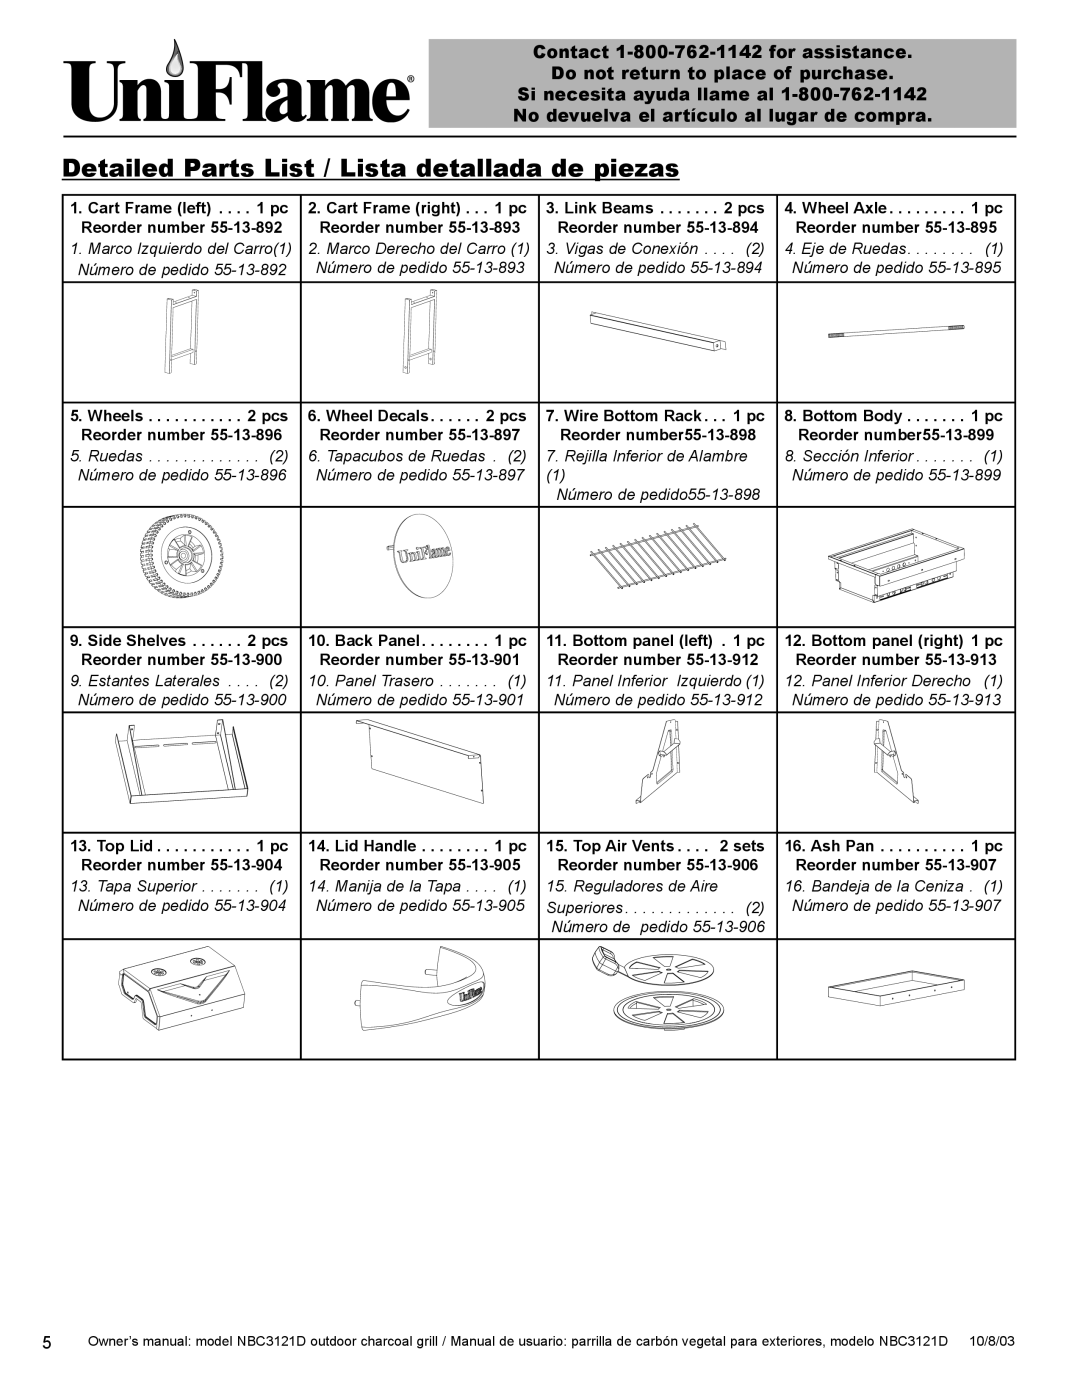 Blue Rhino NBC3121D owner manual Detailed Parts List / Lista detallada de piezas, Contact 1-800-762-1142 for assistance 